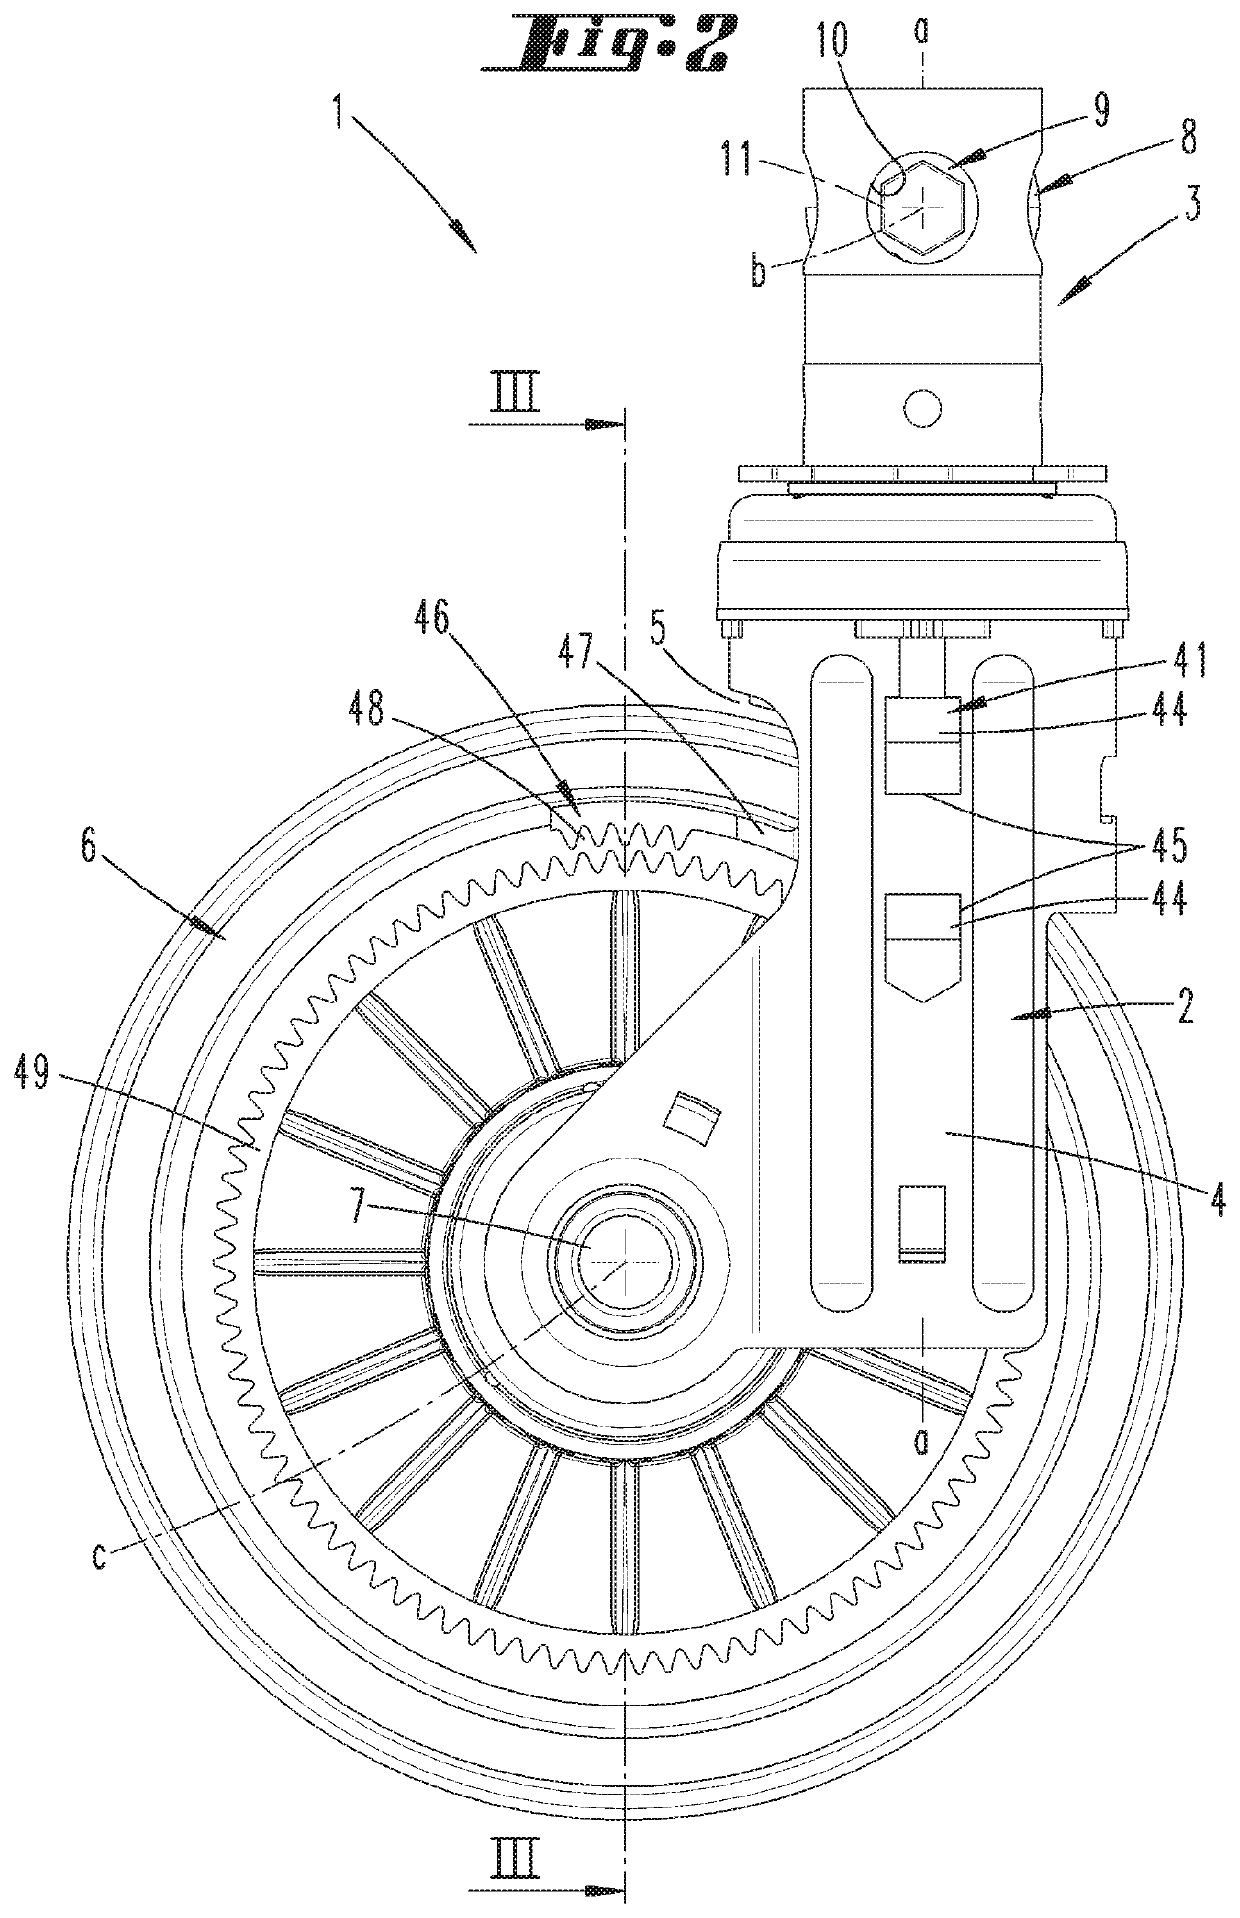 Caster comprising a running wheel